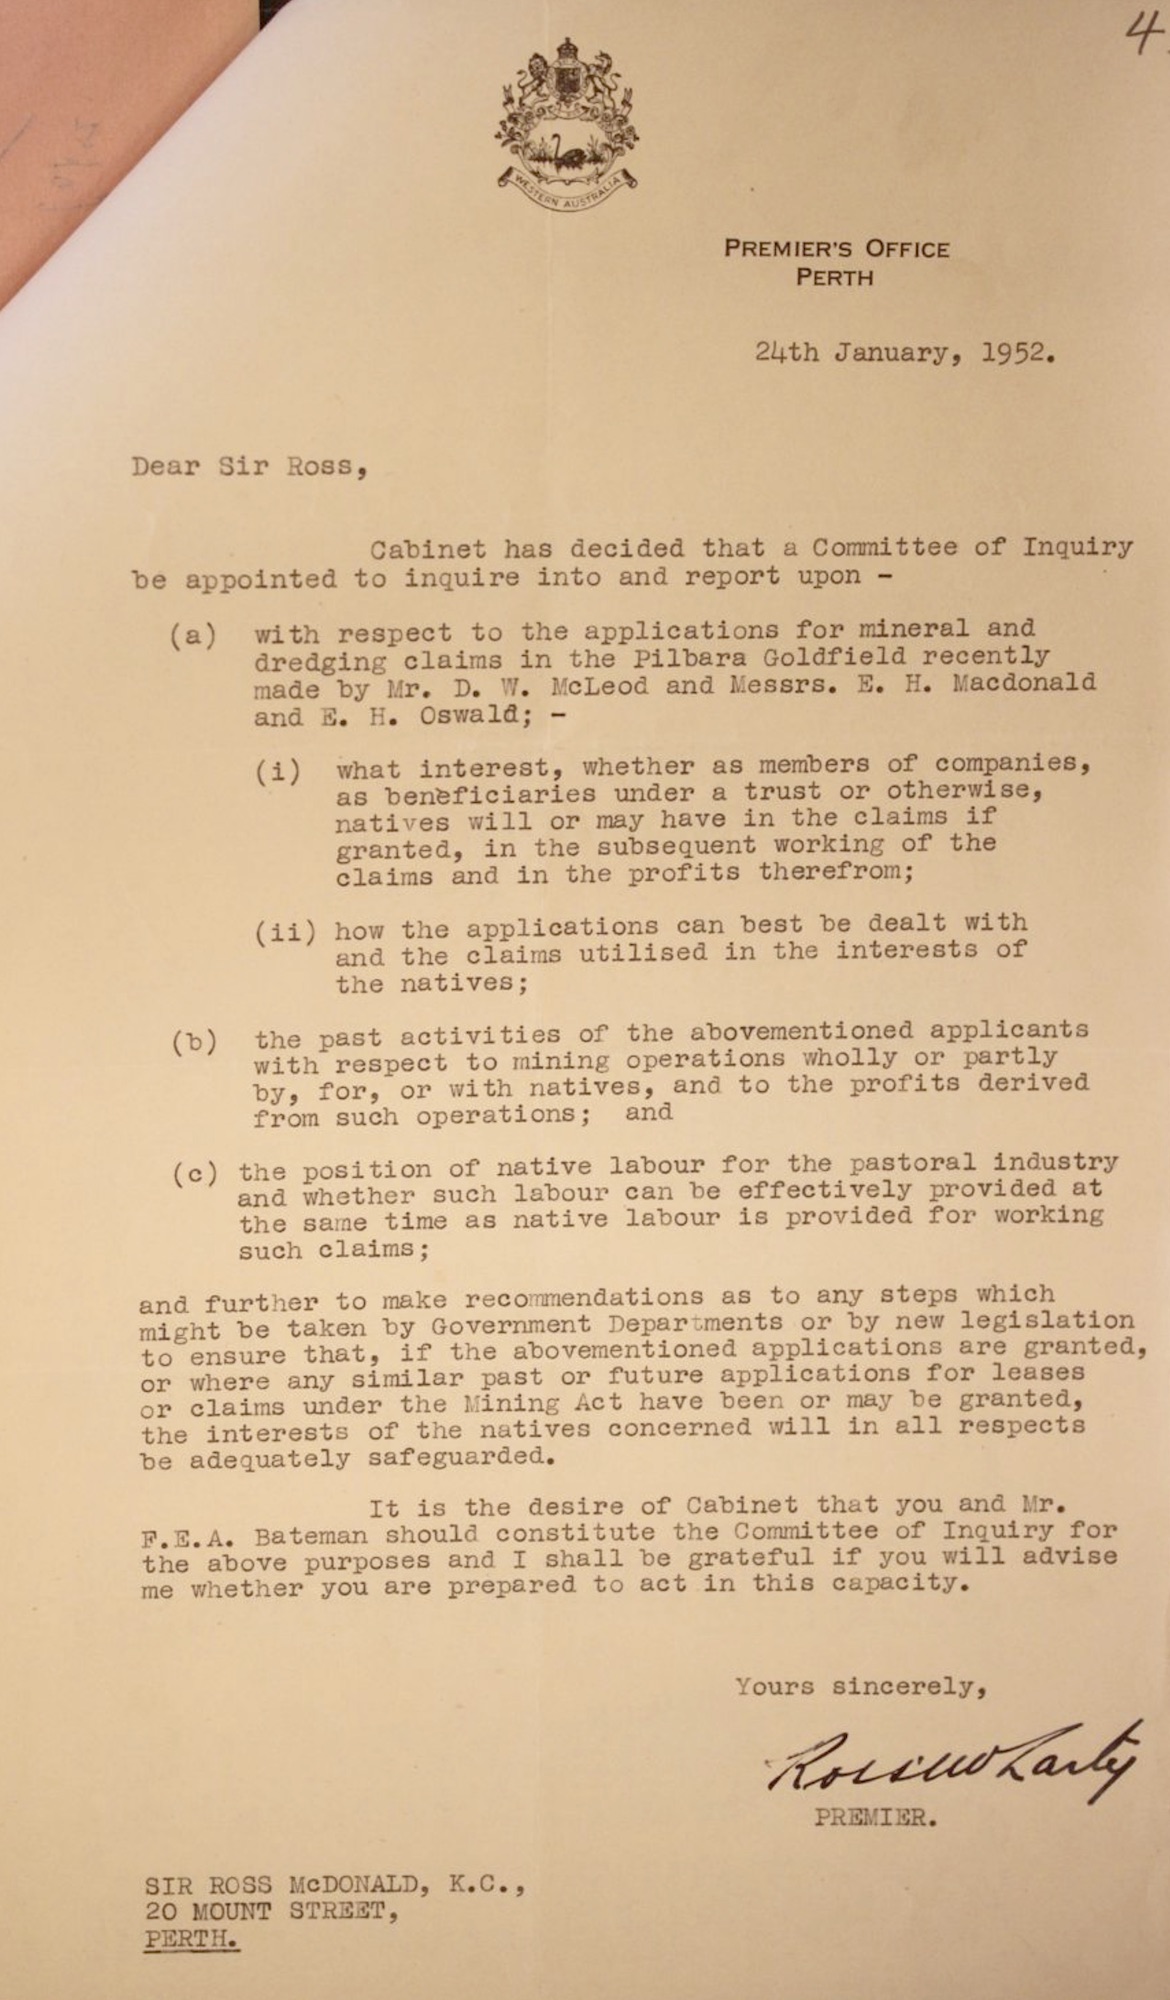 Premier Ross McLarty to Sir Ross McDonald, 24 January 1952